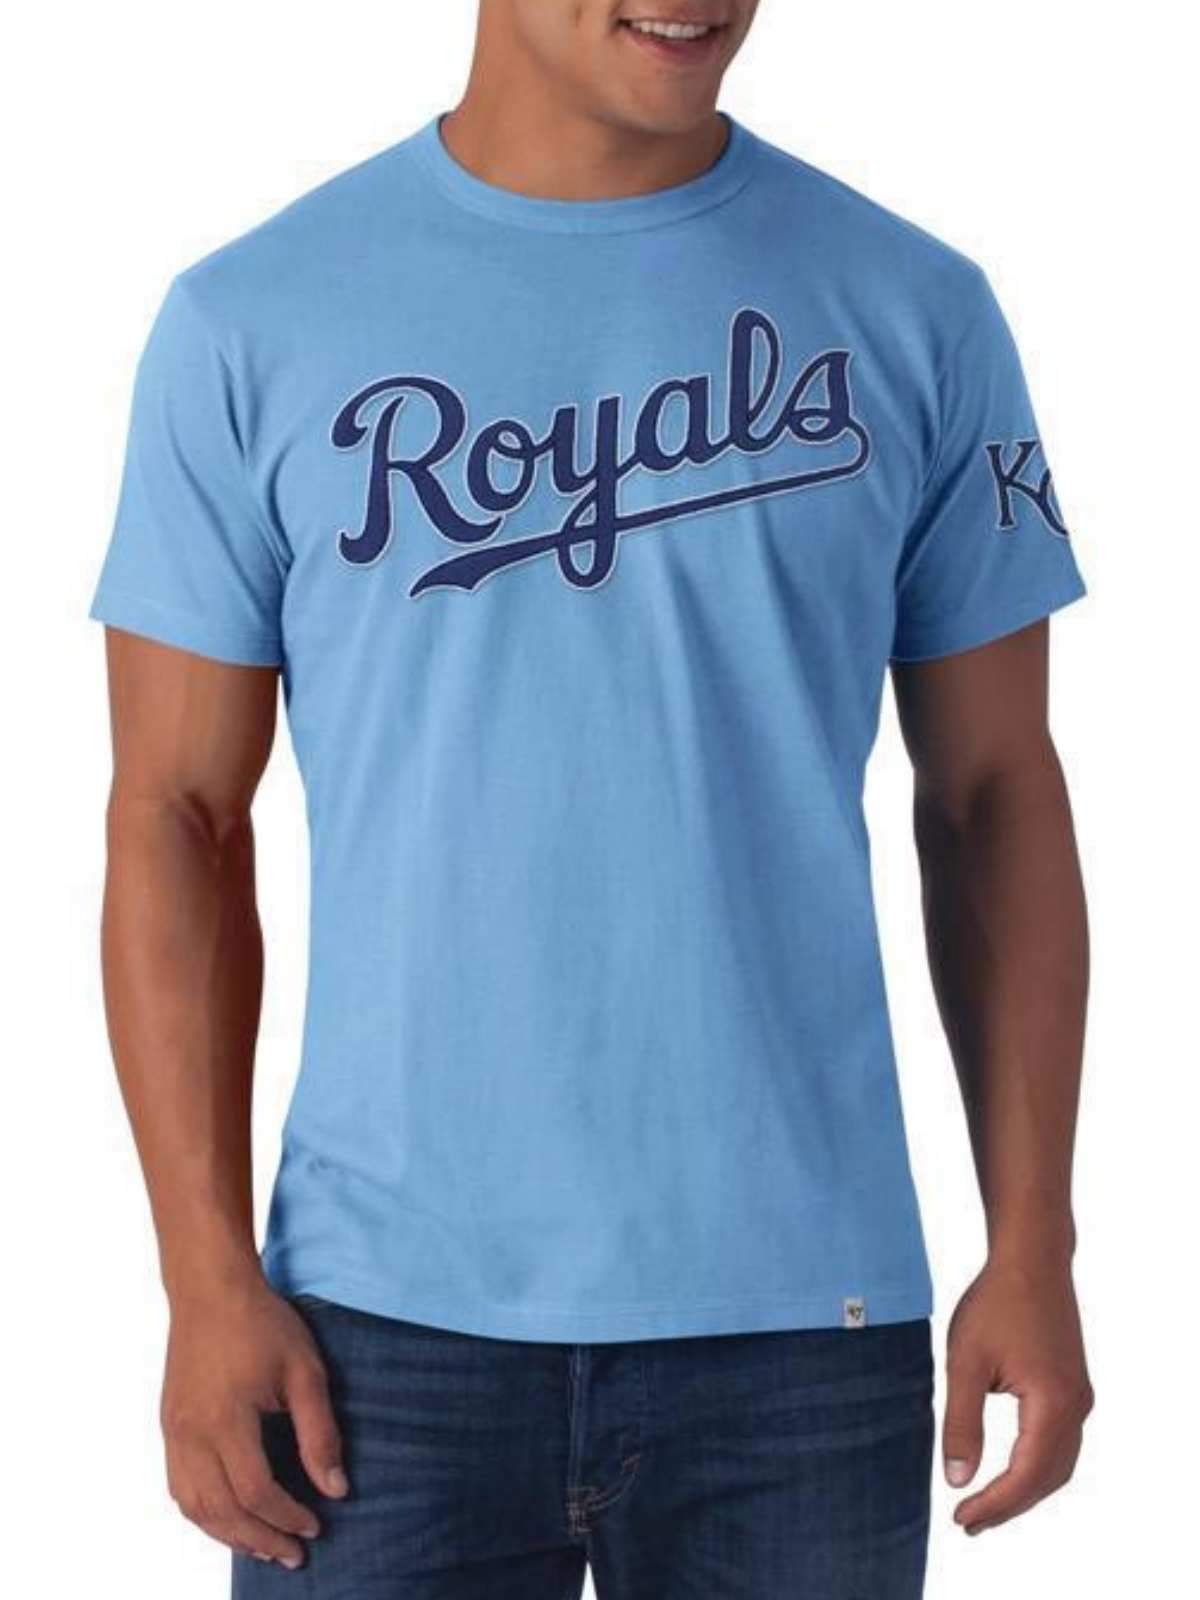 Kc Royals Hawaiian Shirt Kansas City Royals 96 Best Hawaiian